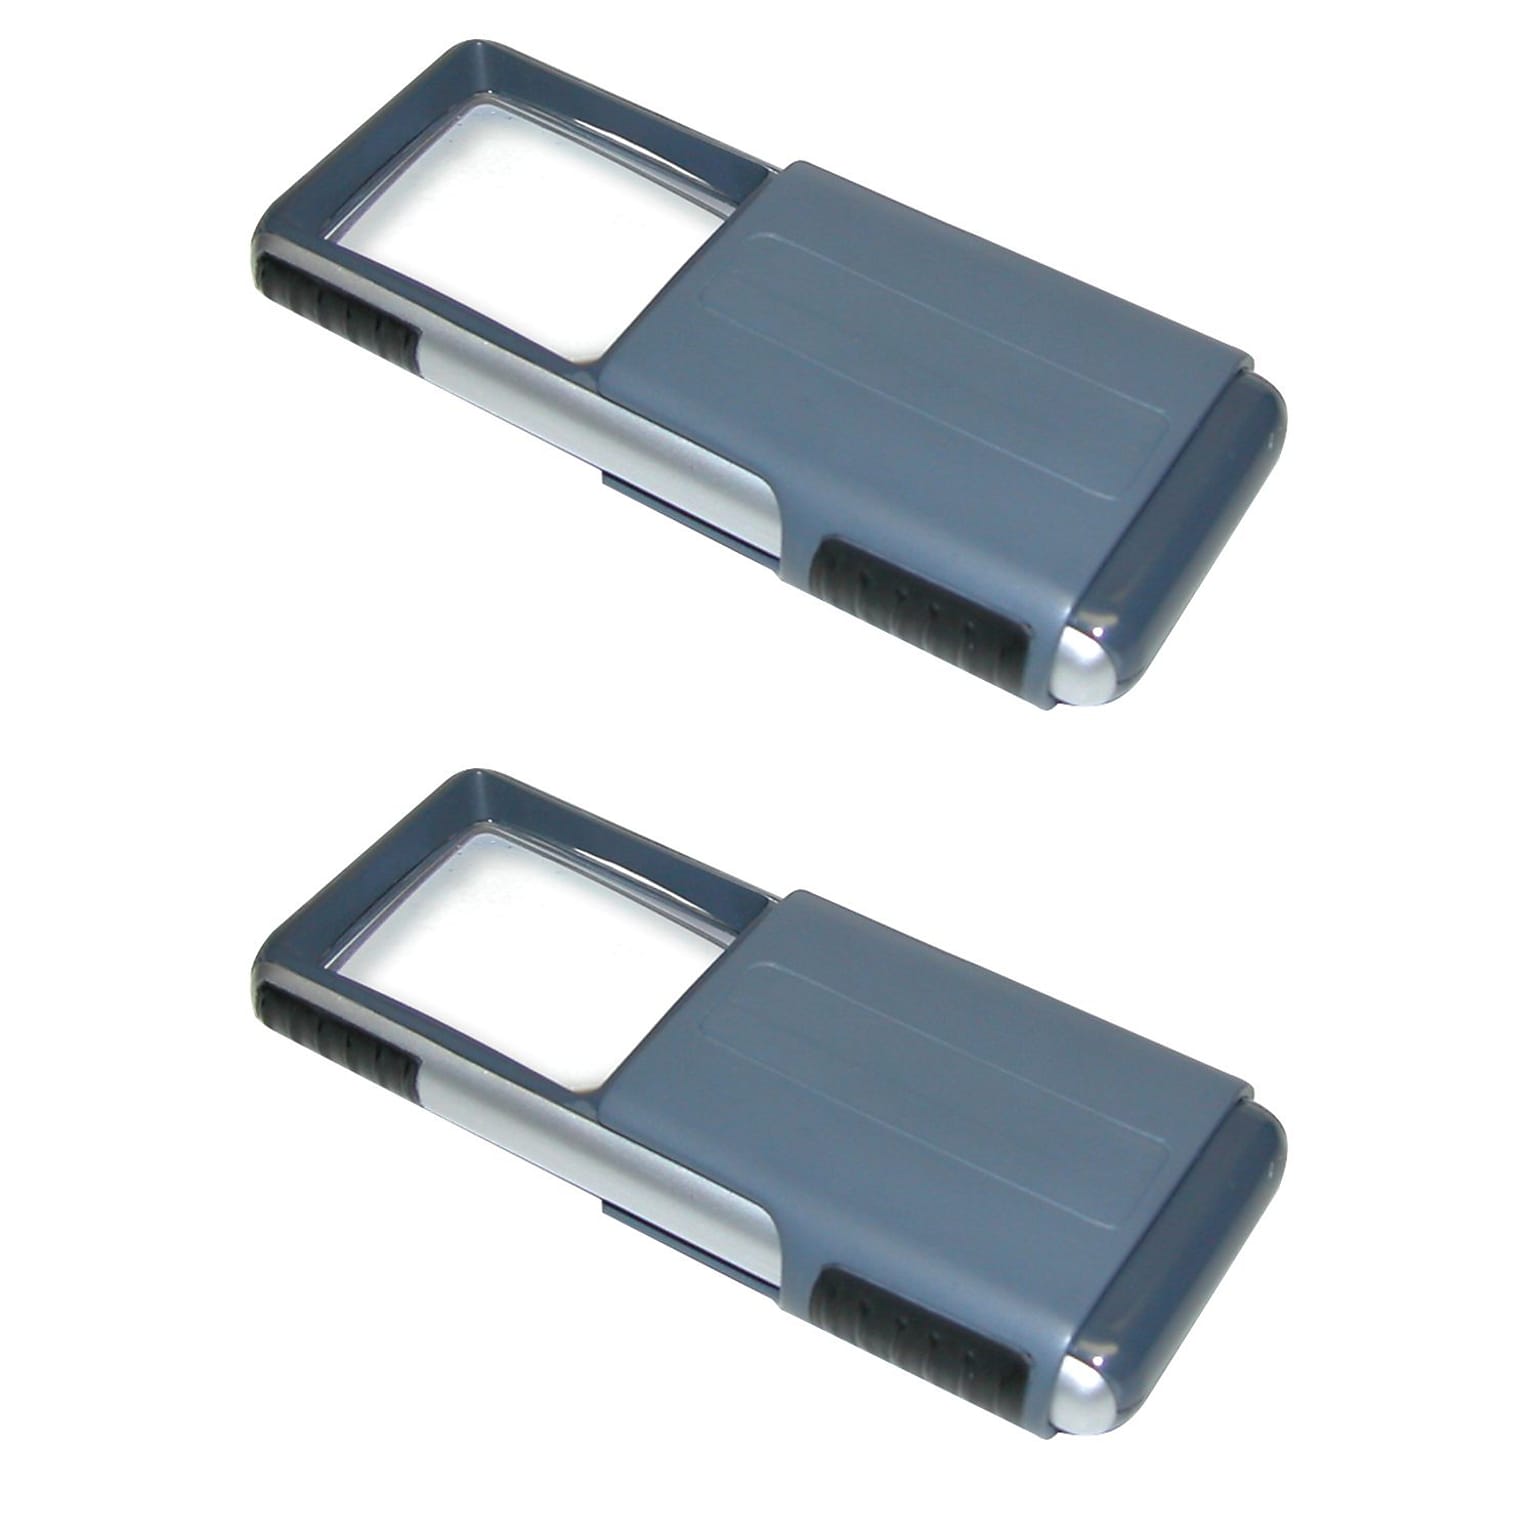 Carson Minibrite 3x Slide-out Led Magnifier, 2-Pack (818549020331)